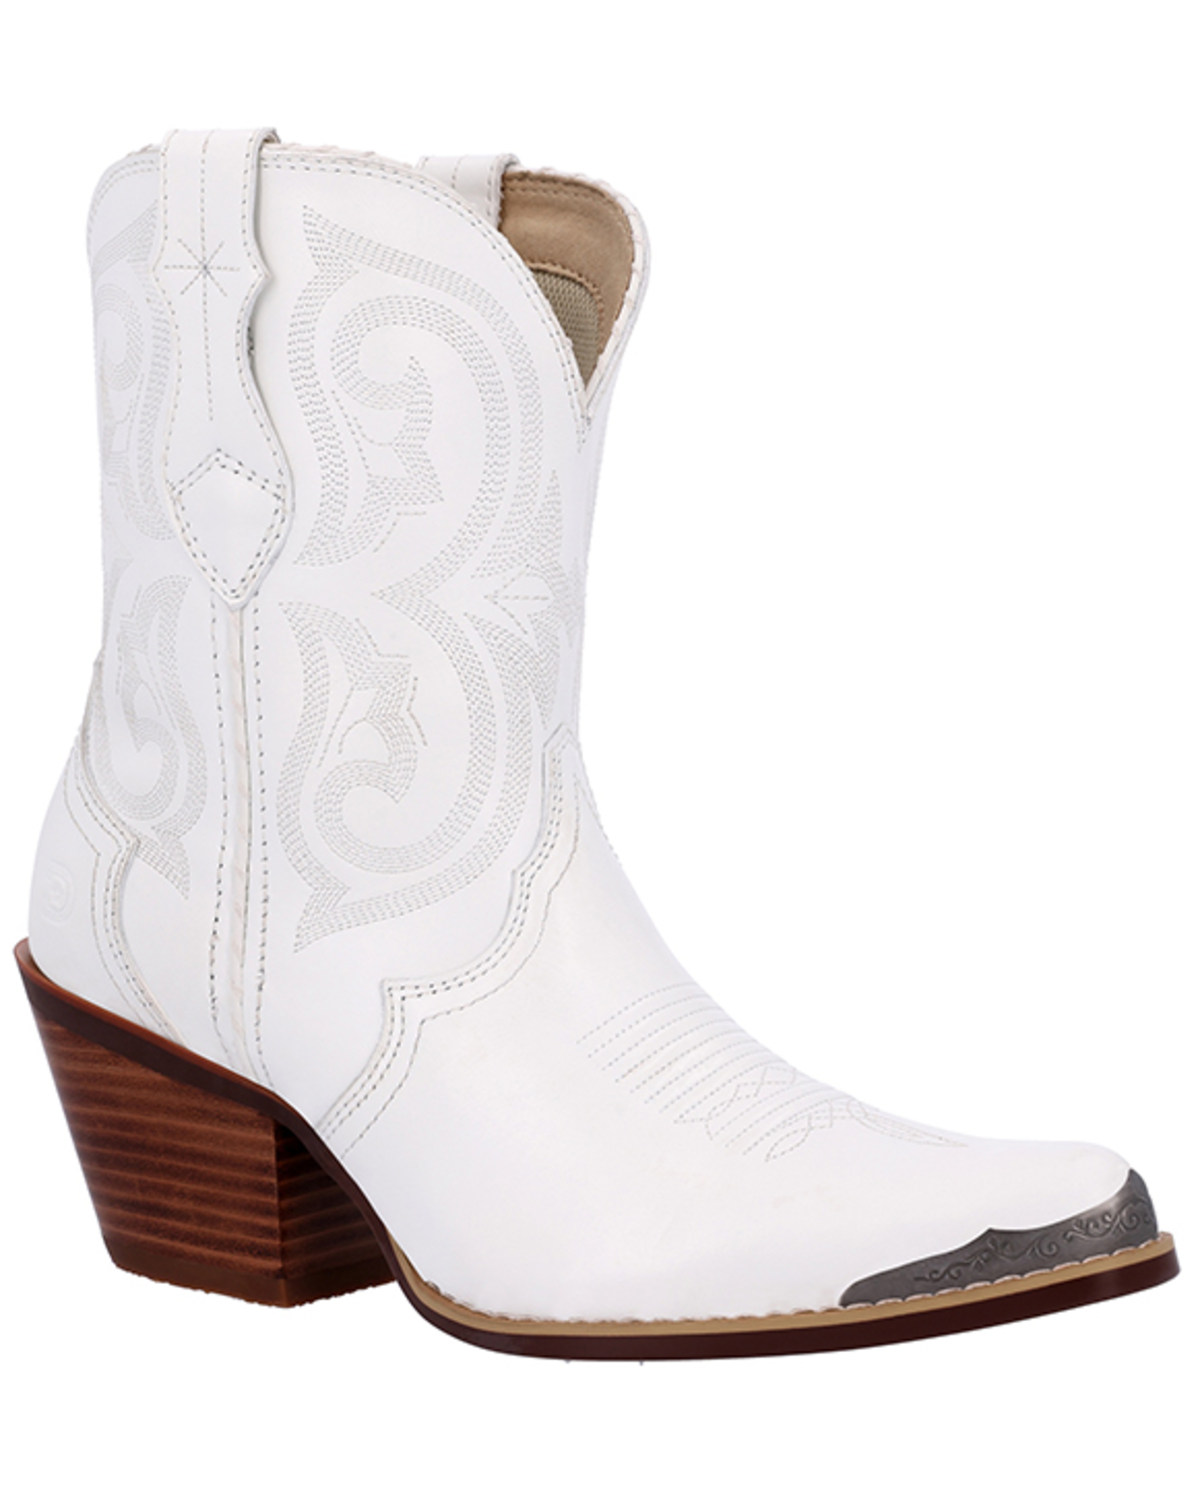 Durango Women's Crush Short Western Boots - Pointed Toe